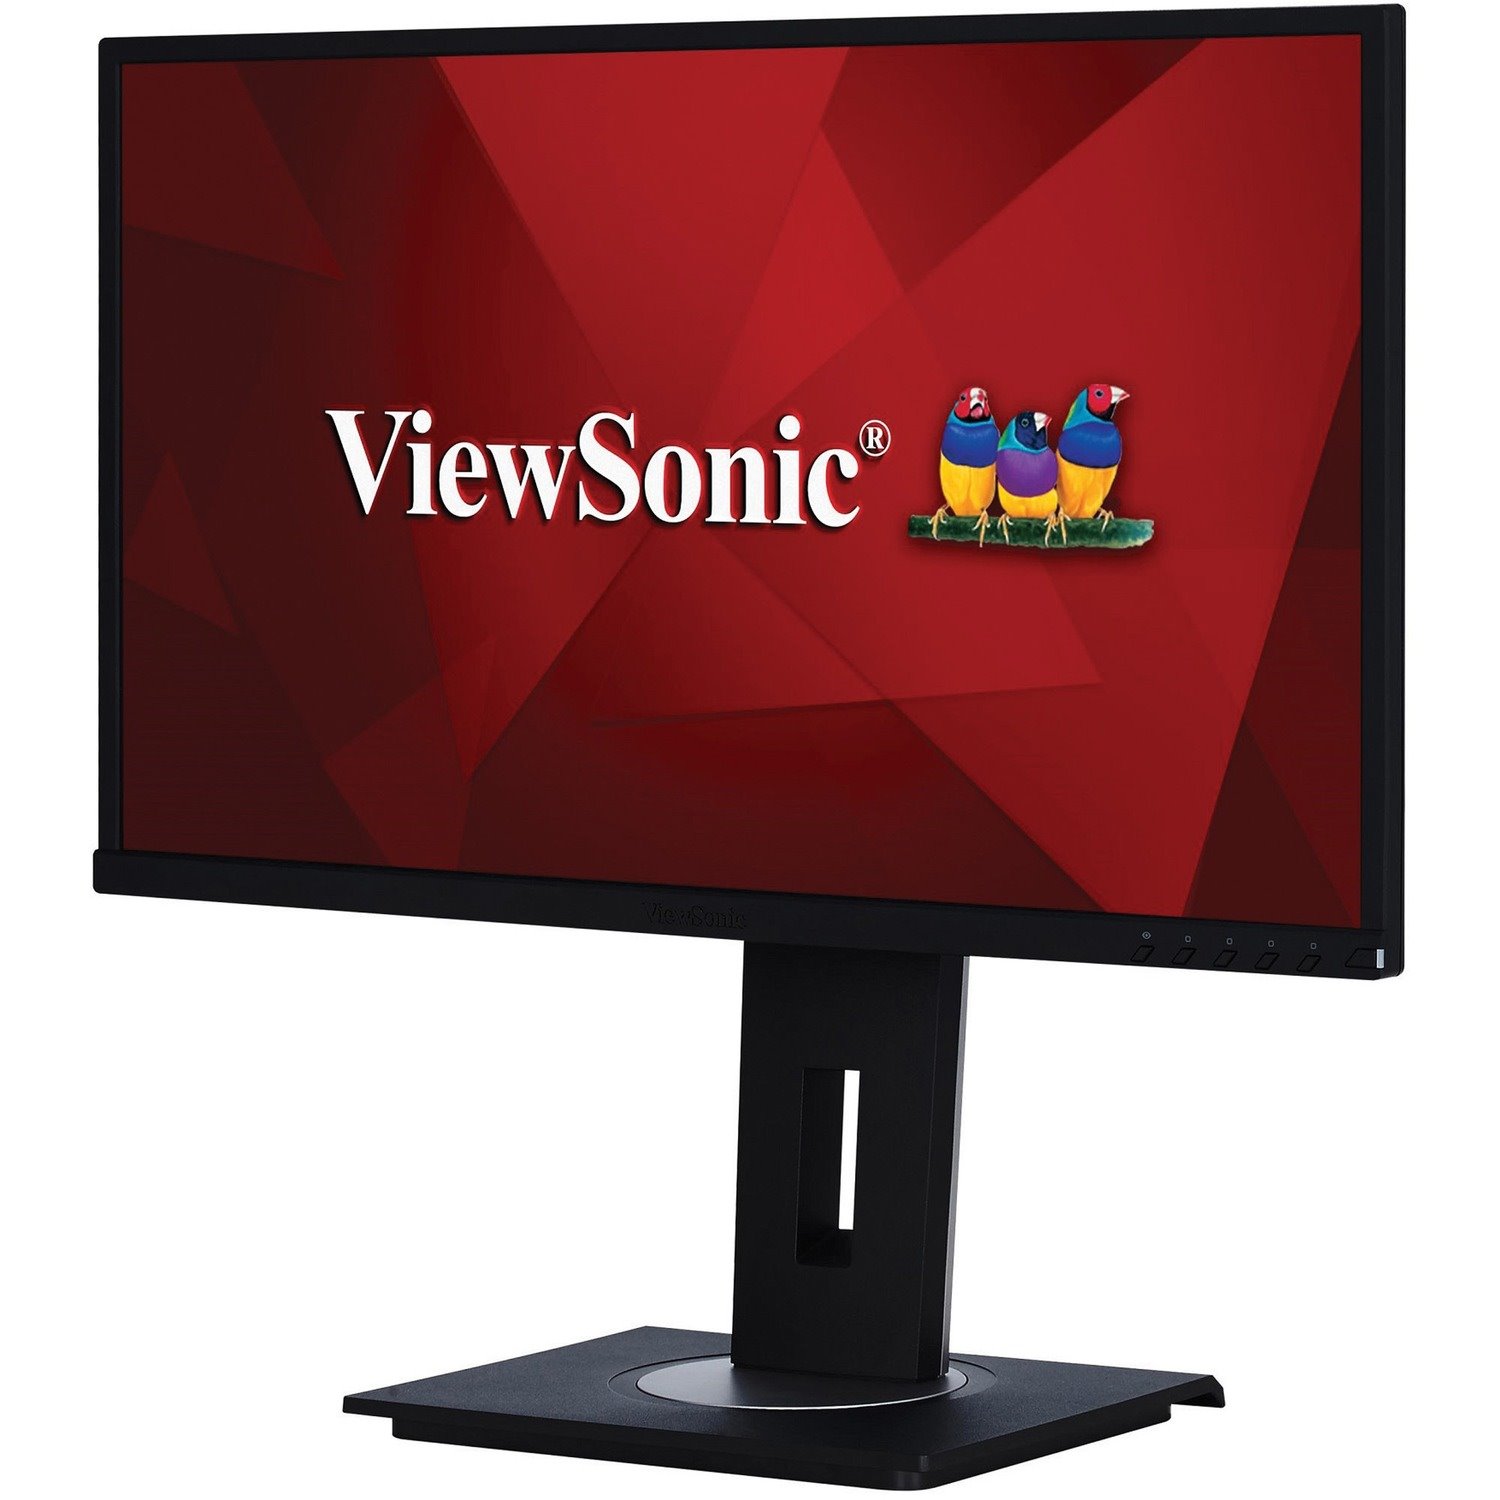 ViewSonic VG2448 61 cm (24") Full HD WLED LCD Monitor - 16:9 - Black